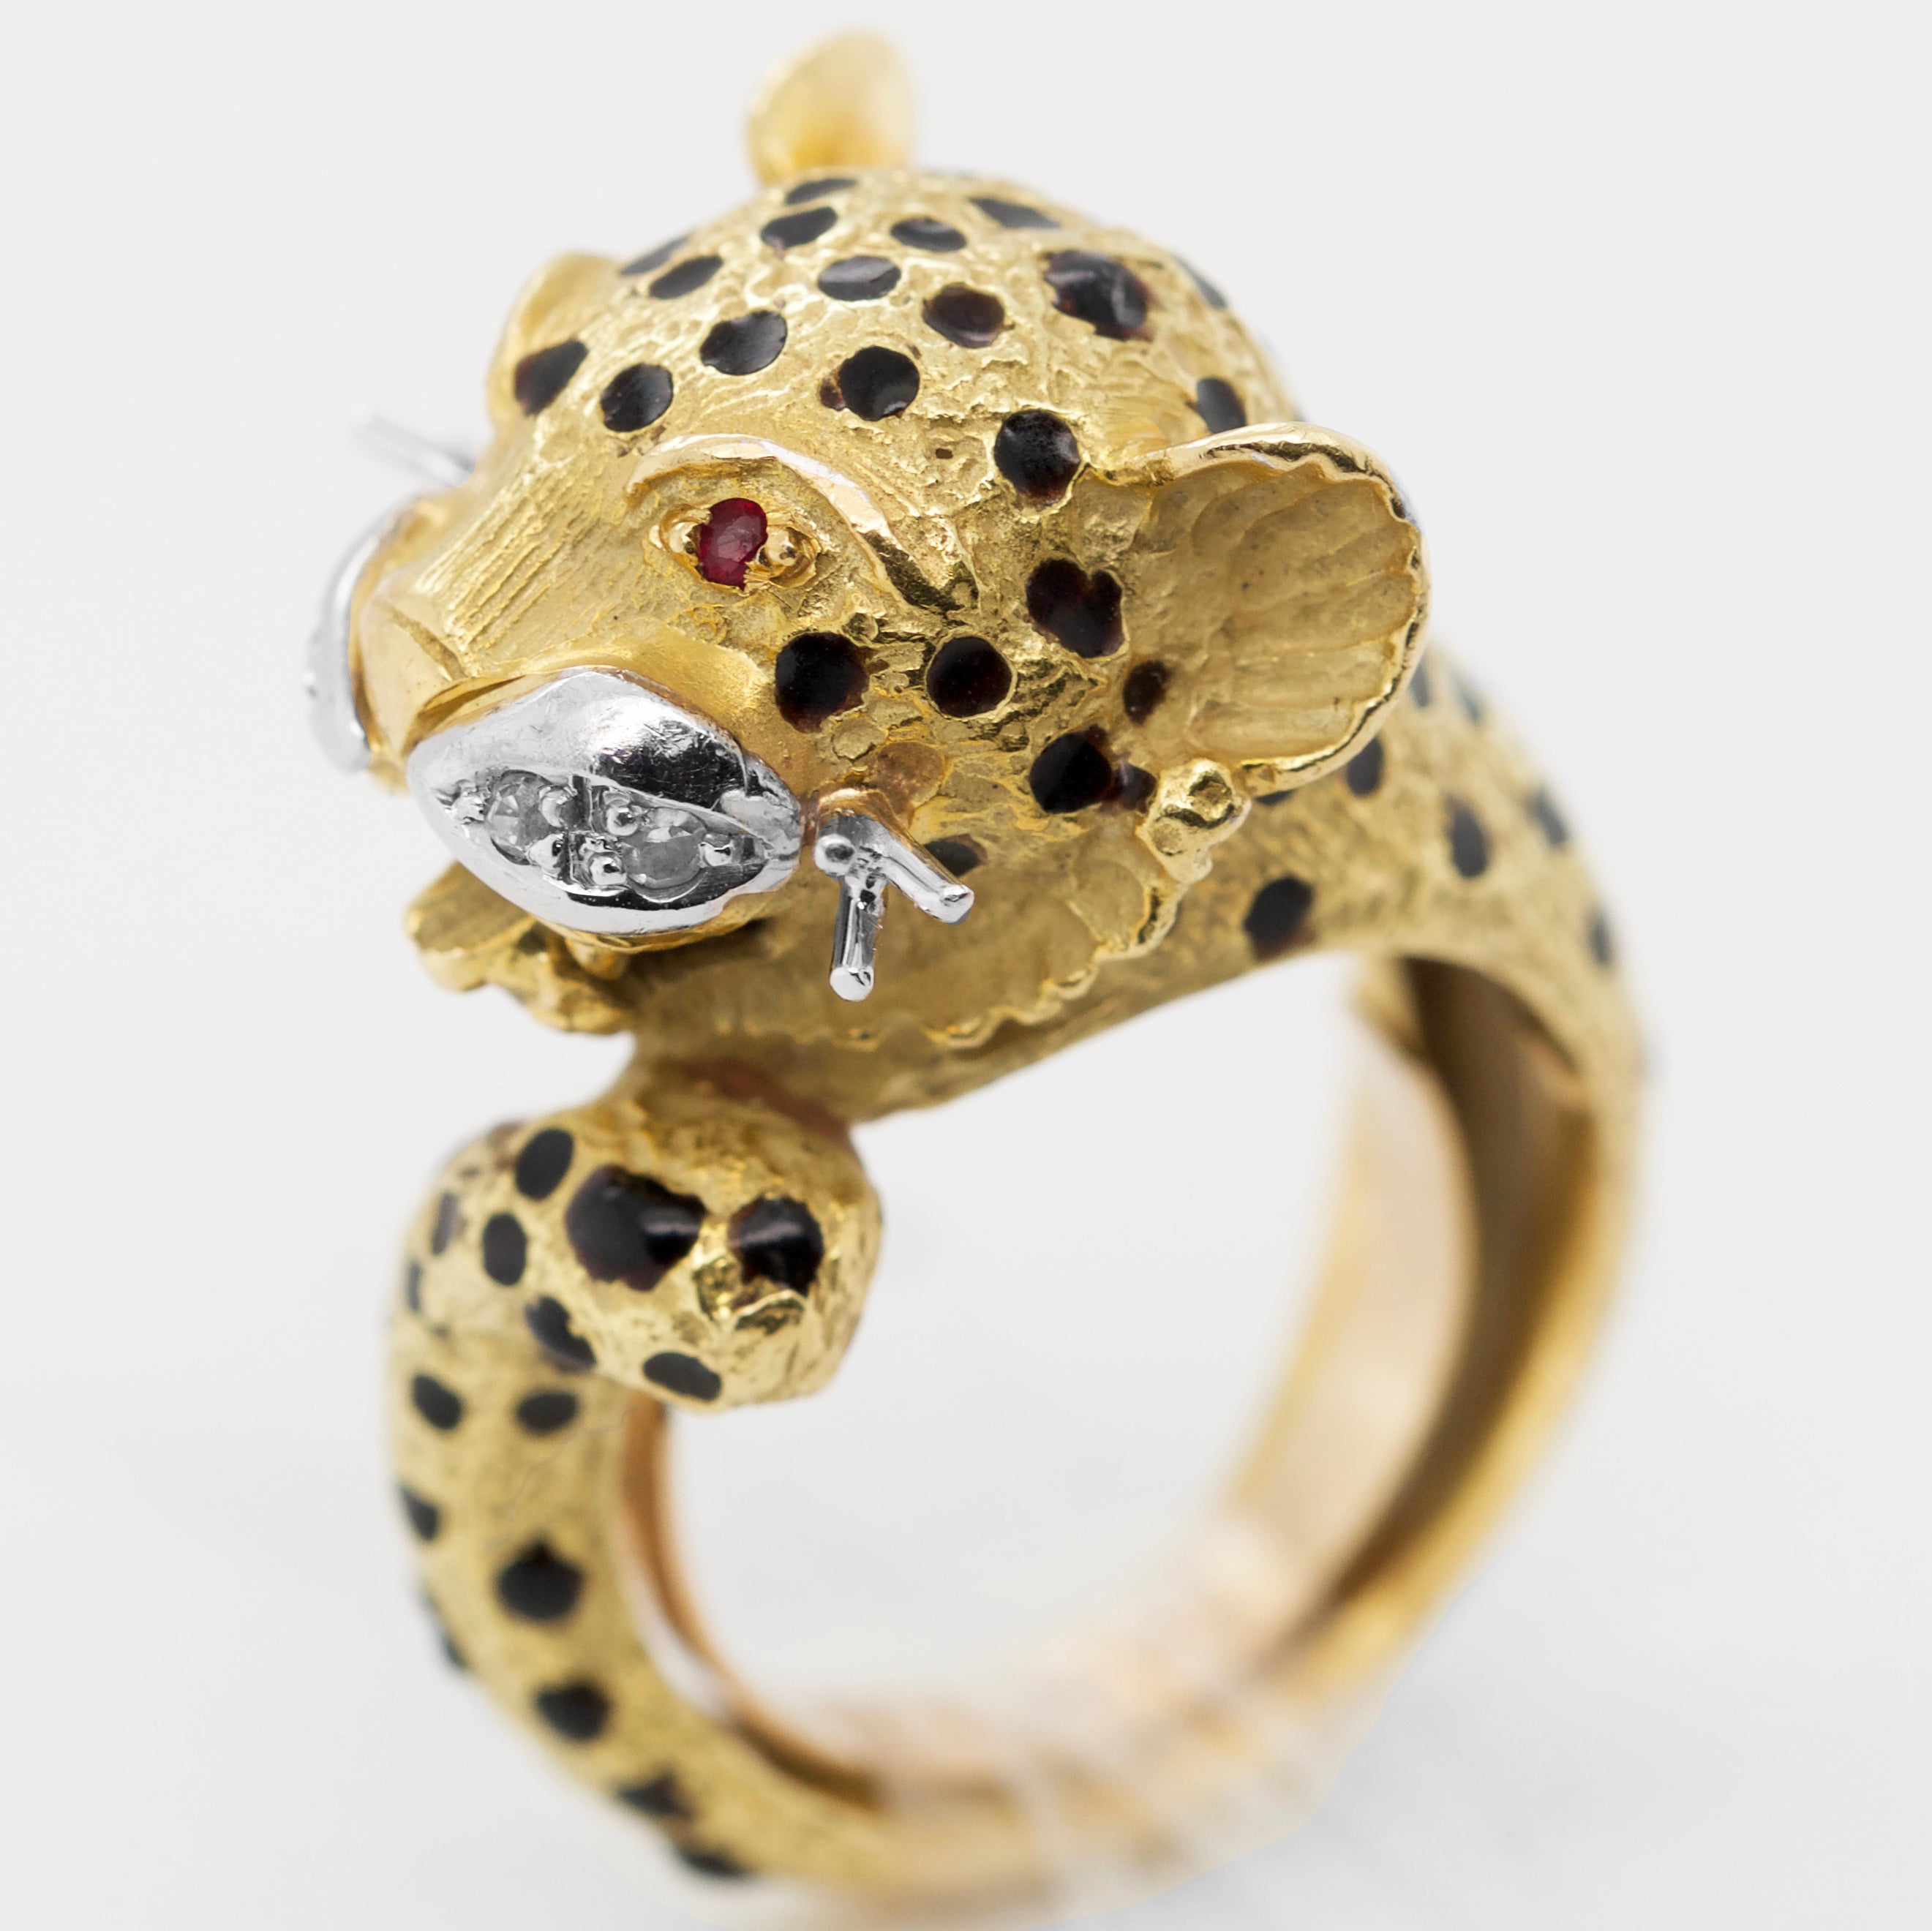 Buy quality 916 gold casting Jaguar design gents ring in Ahmedabad